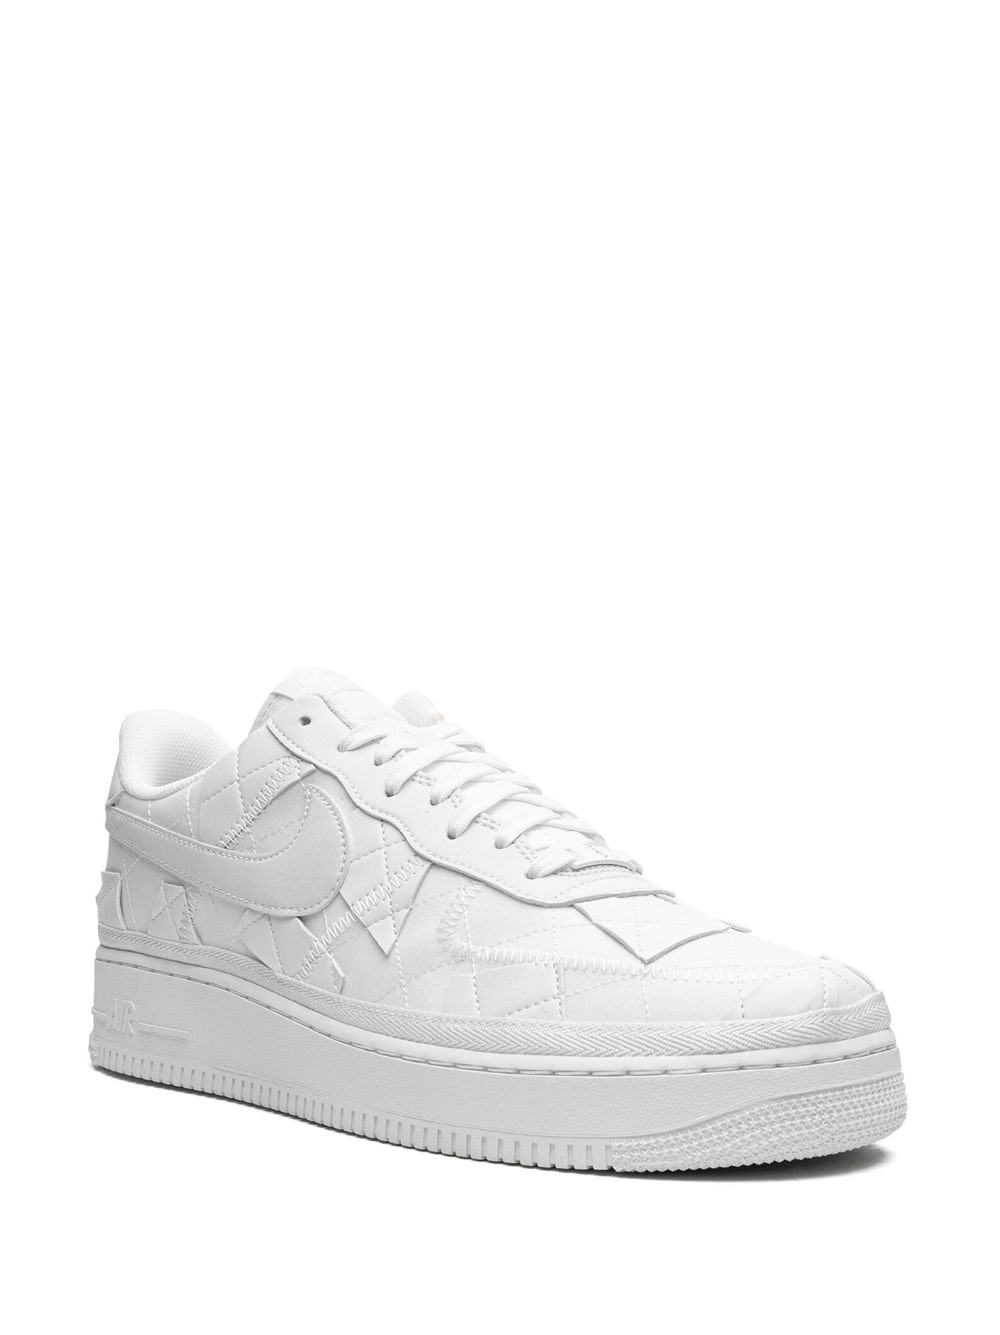 Image 2 of Nike x Billie Ellish Air Force 1 Low "Triple White" sneakers